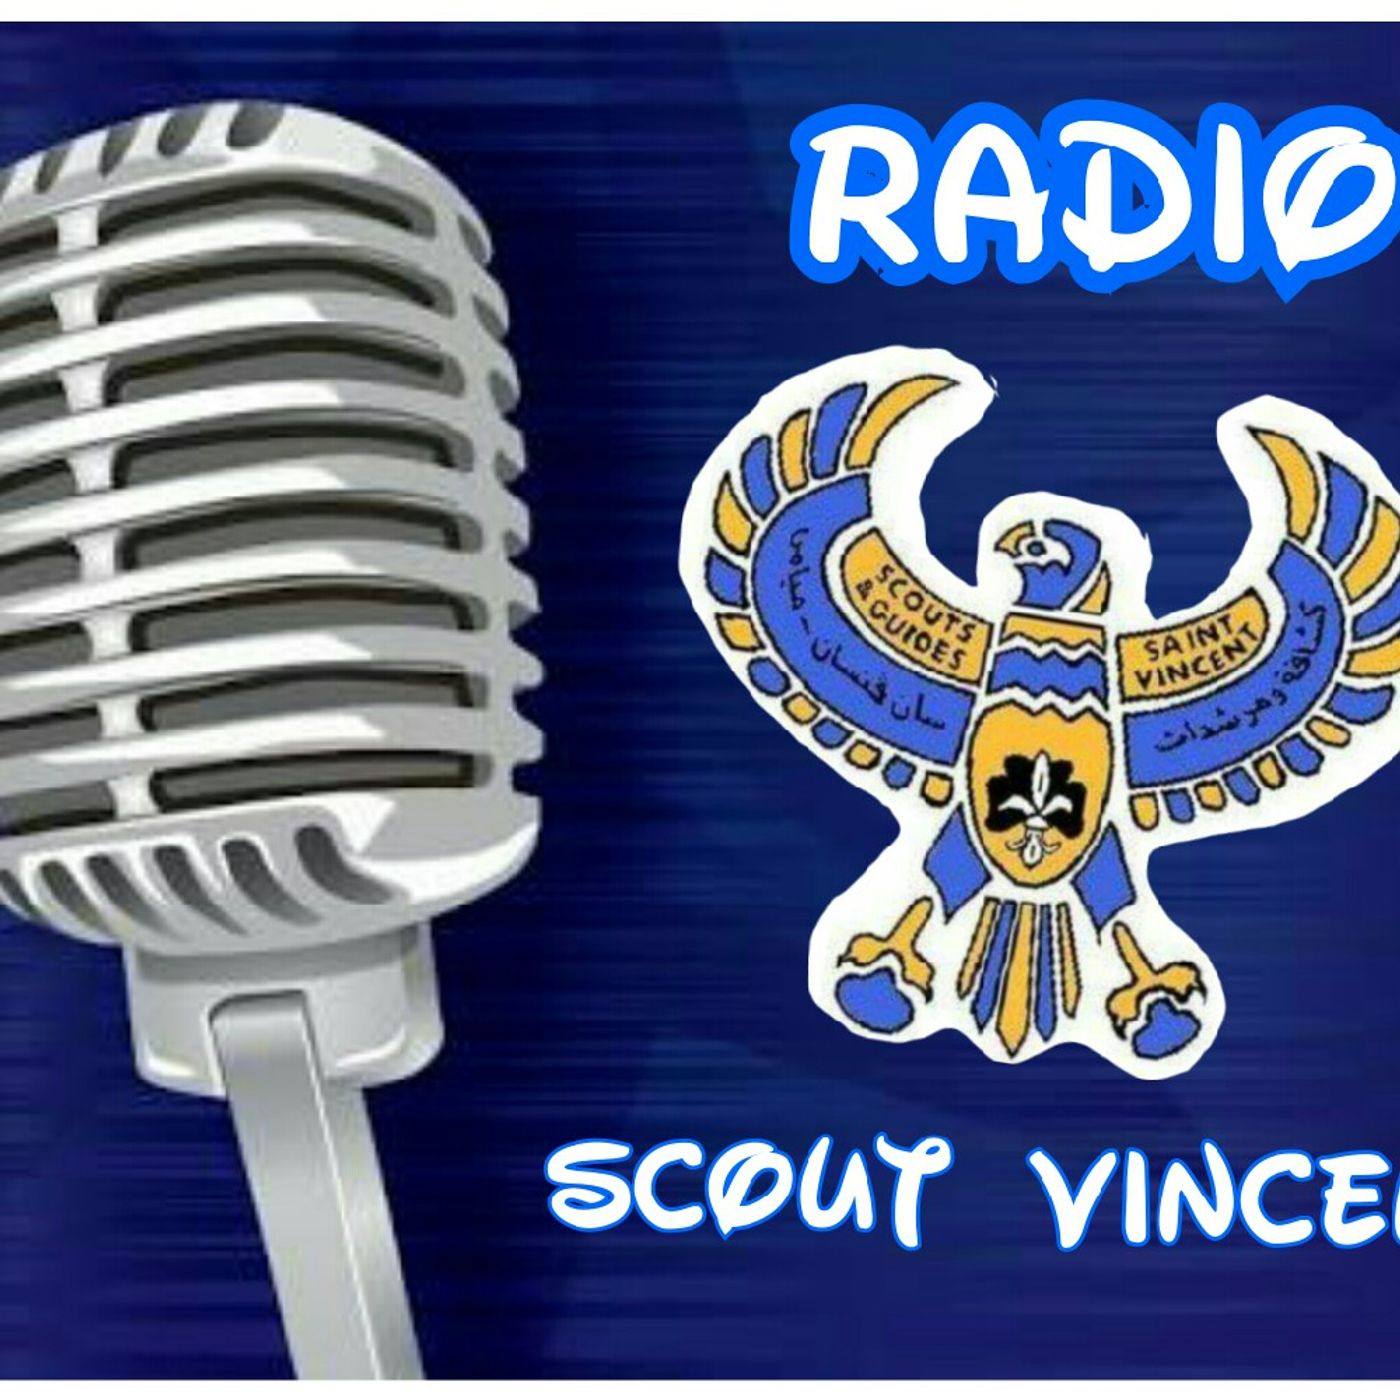 Radio Scout Vincent's tracks